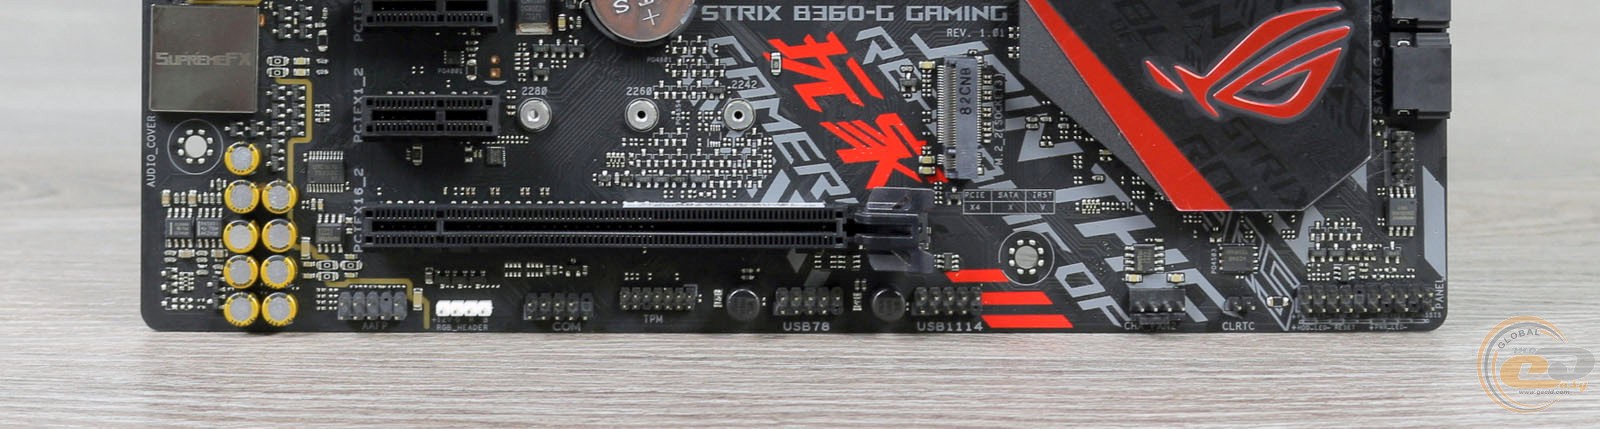 ASUS ROG Strix b360-g. ASUS ROG передняя панель. Джампер ROG Strix. Strix 8360-g Gaming.